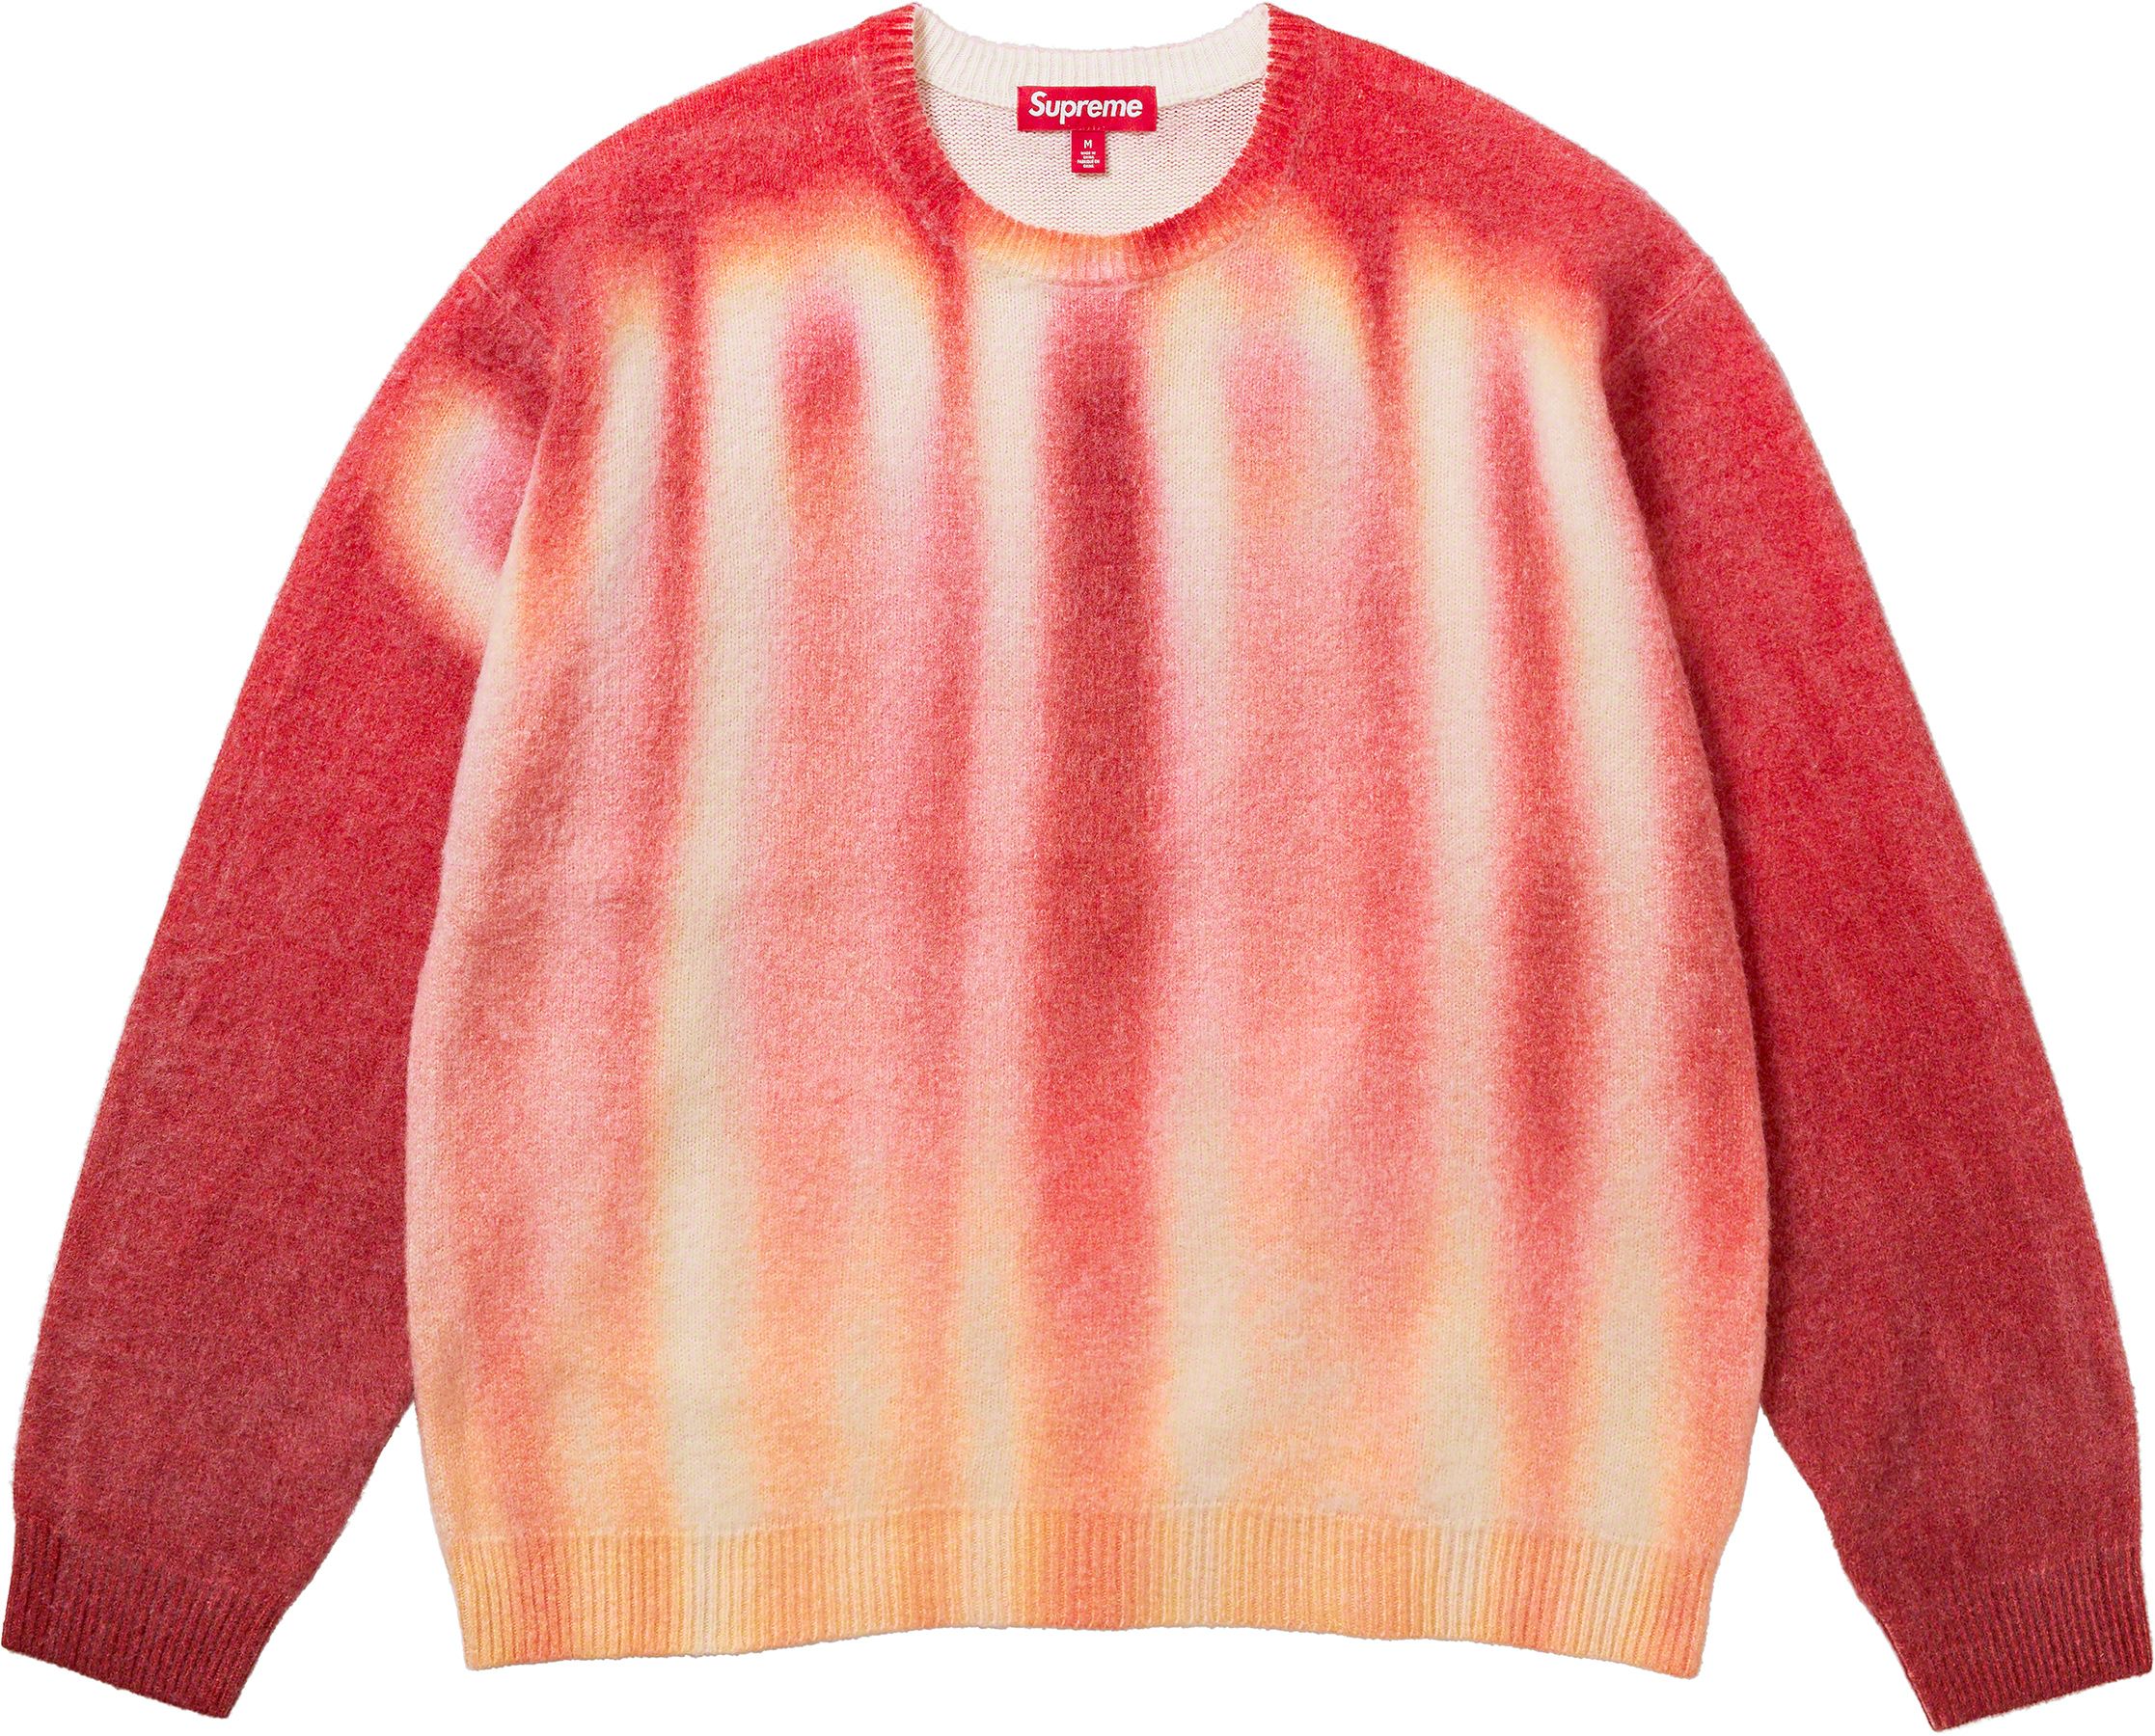 XXLサイズ supreme blurred logo セーター 赤ファッション